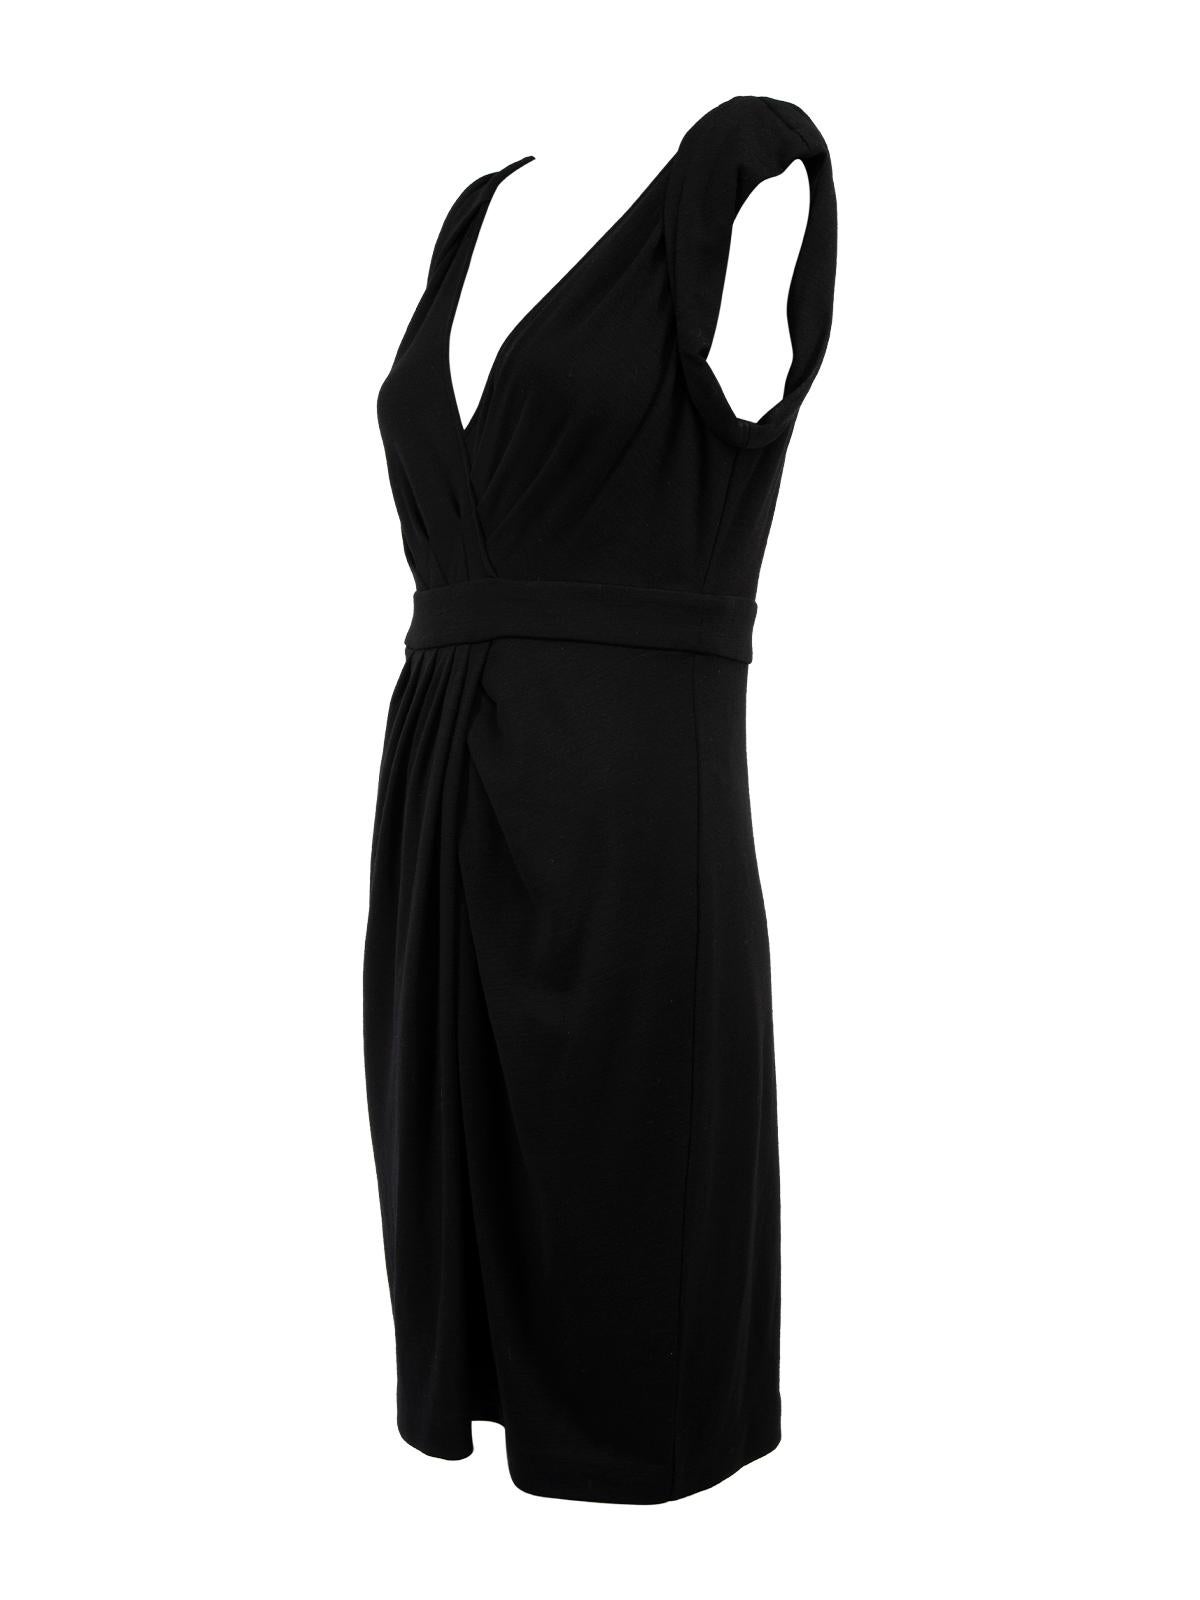 Women's Diane von Furstenberg Black Wool Sleeveless Wrap Dress Size L For Sale